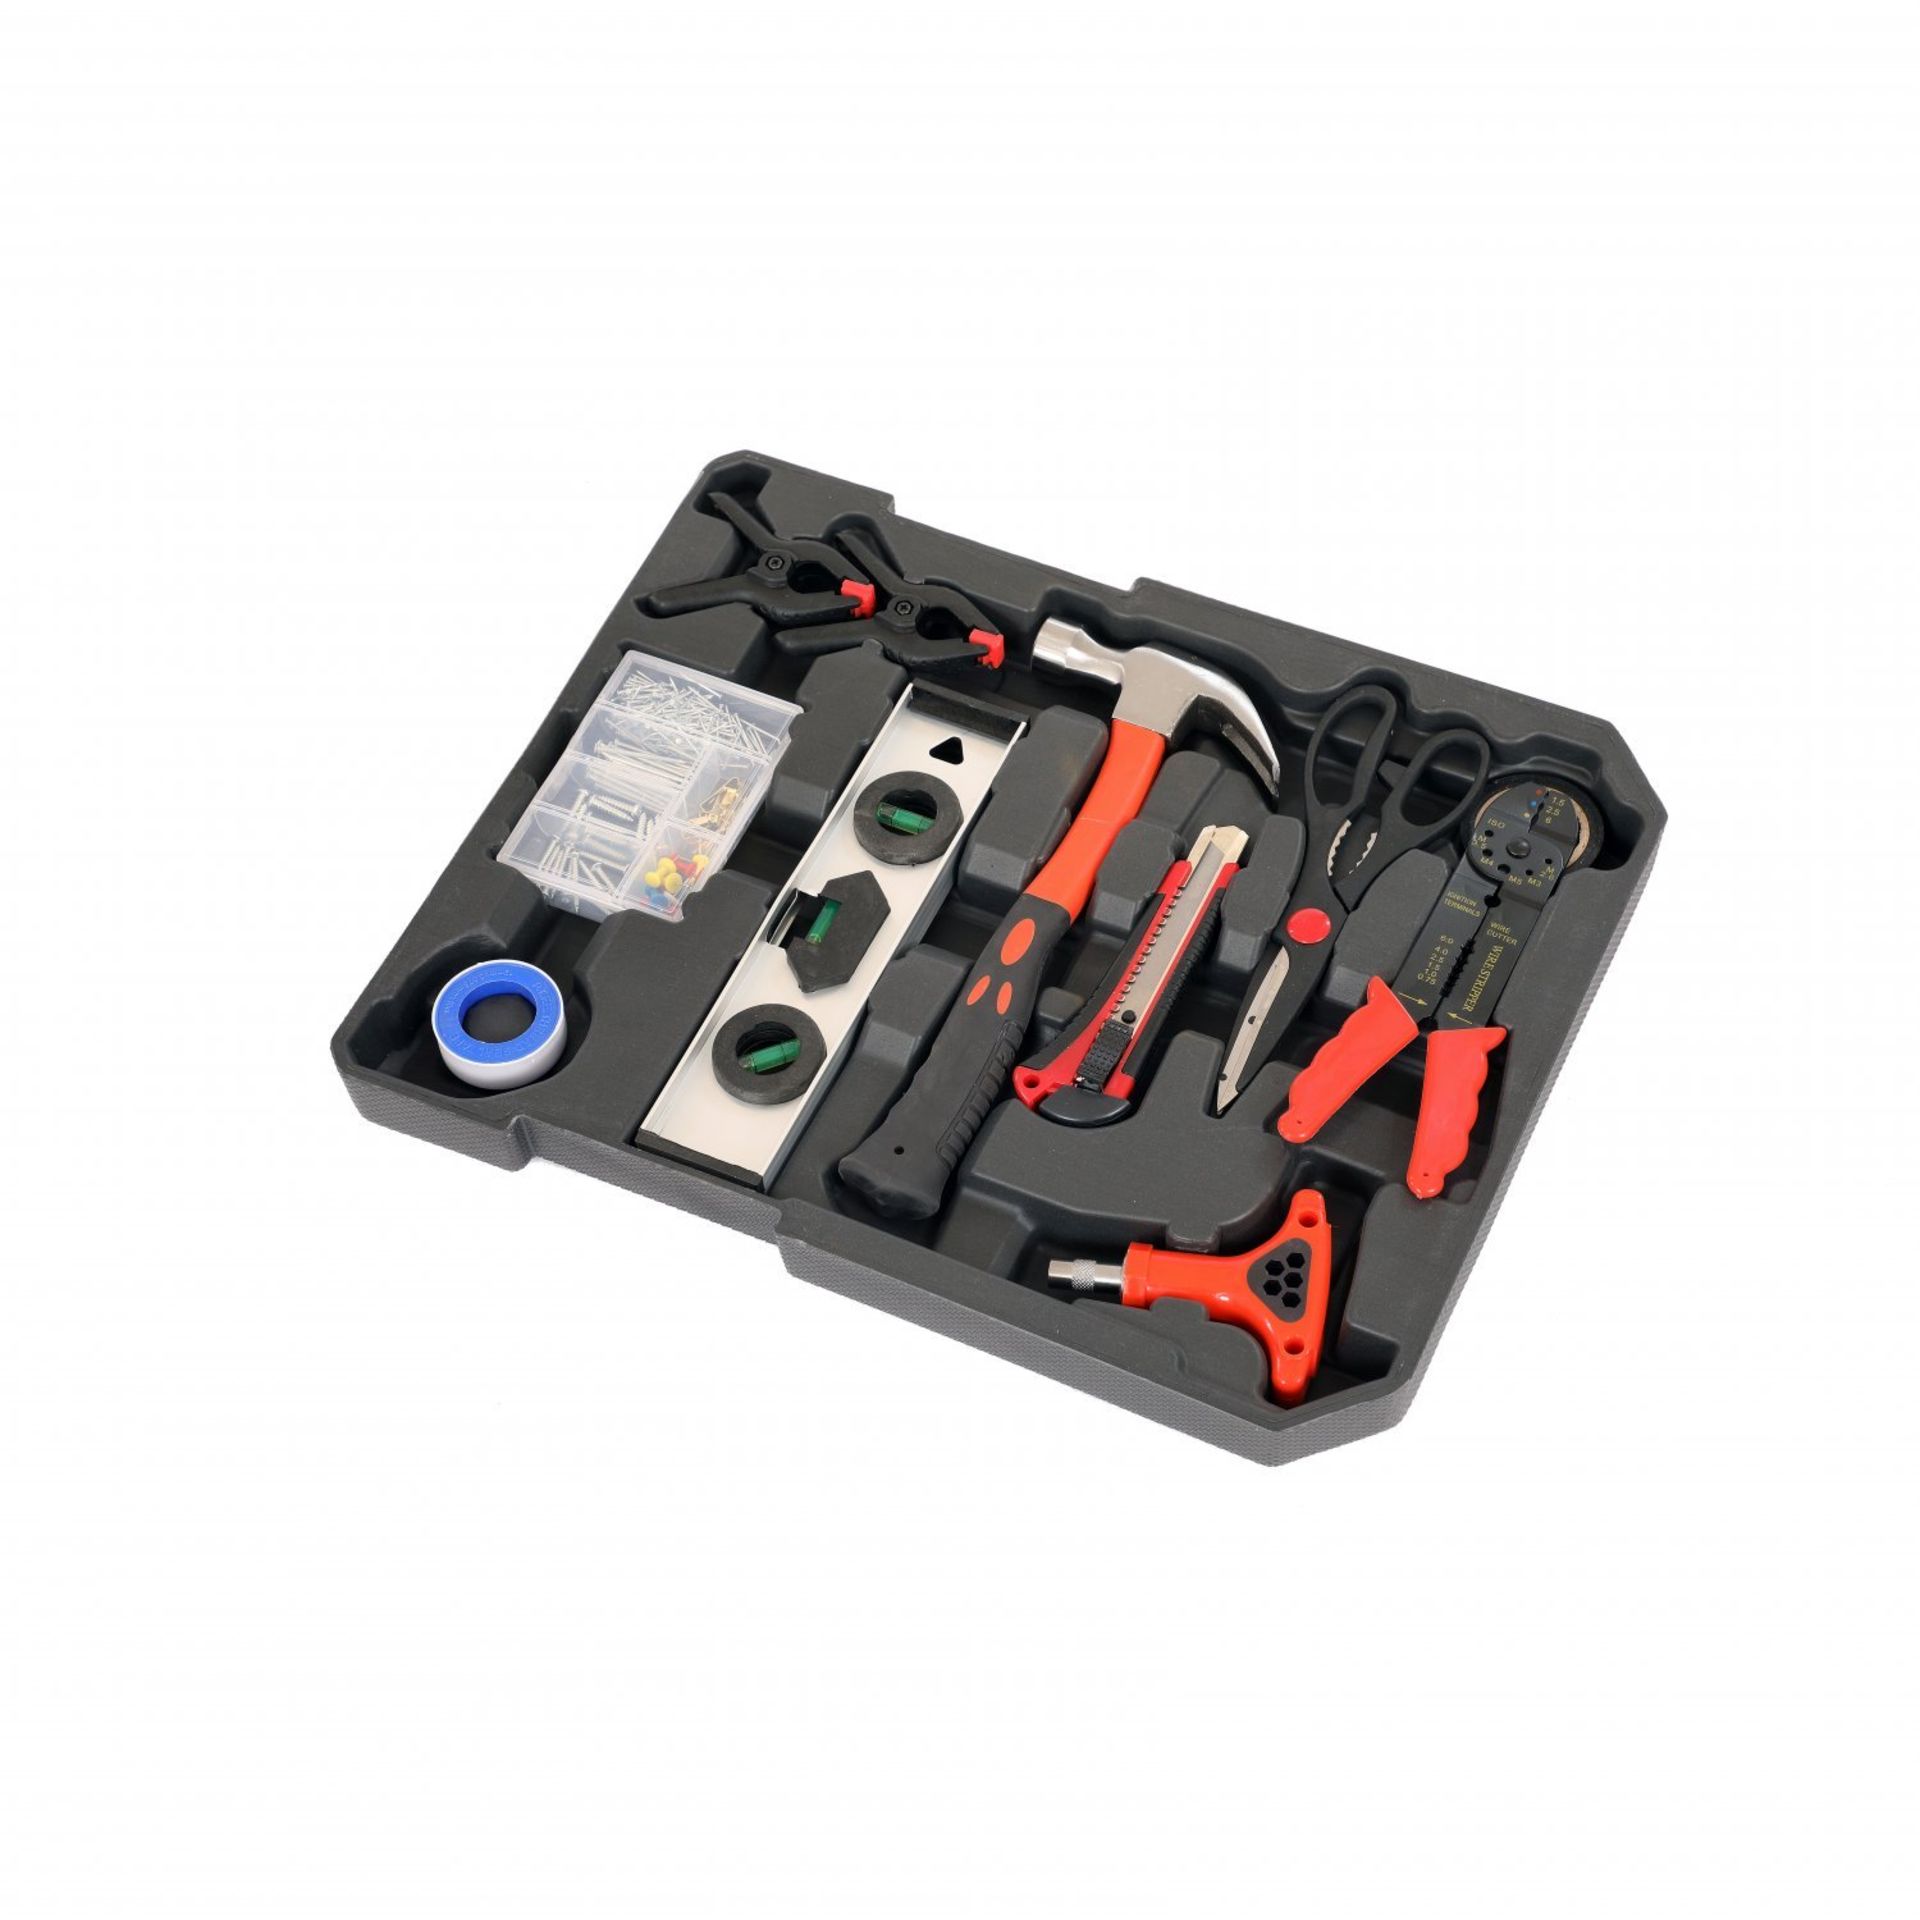 (RL43) 718pc Tool Screwdriver Bit Spanner Socket Set Kit with Case 24x Screwdriver Bits: ... - Image 2 of 2